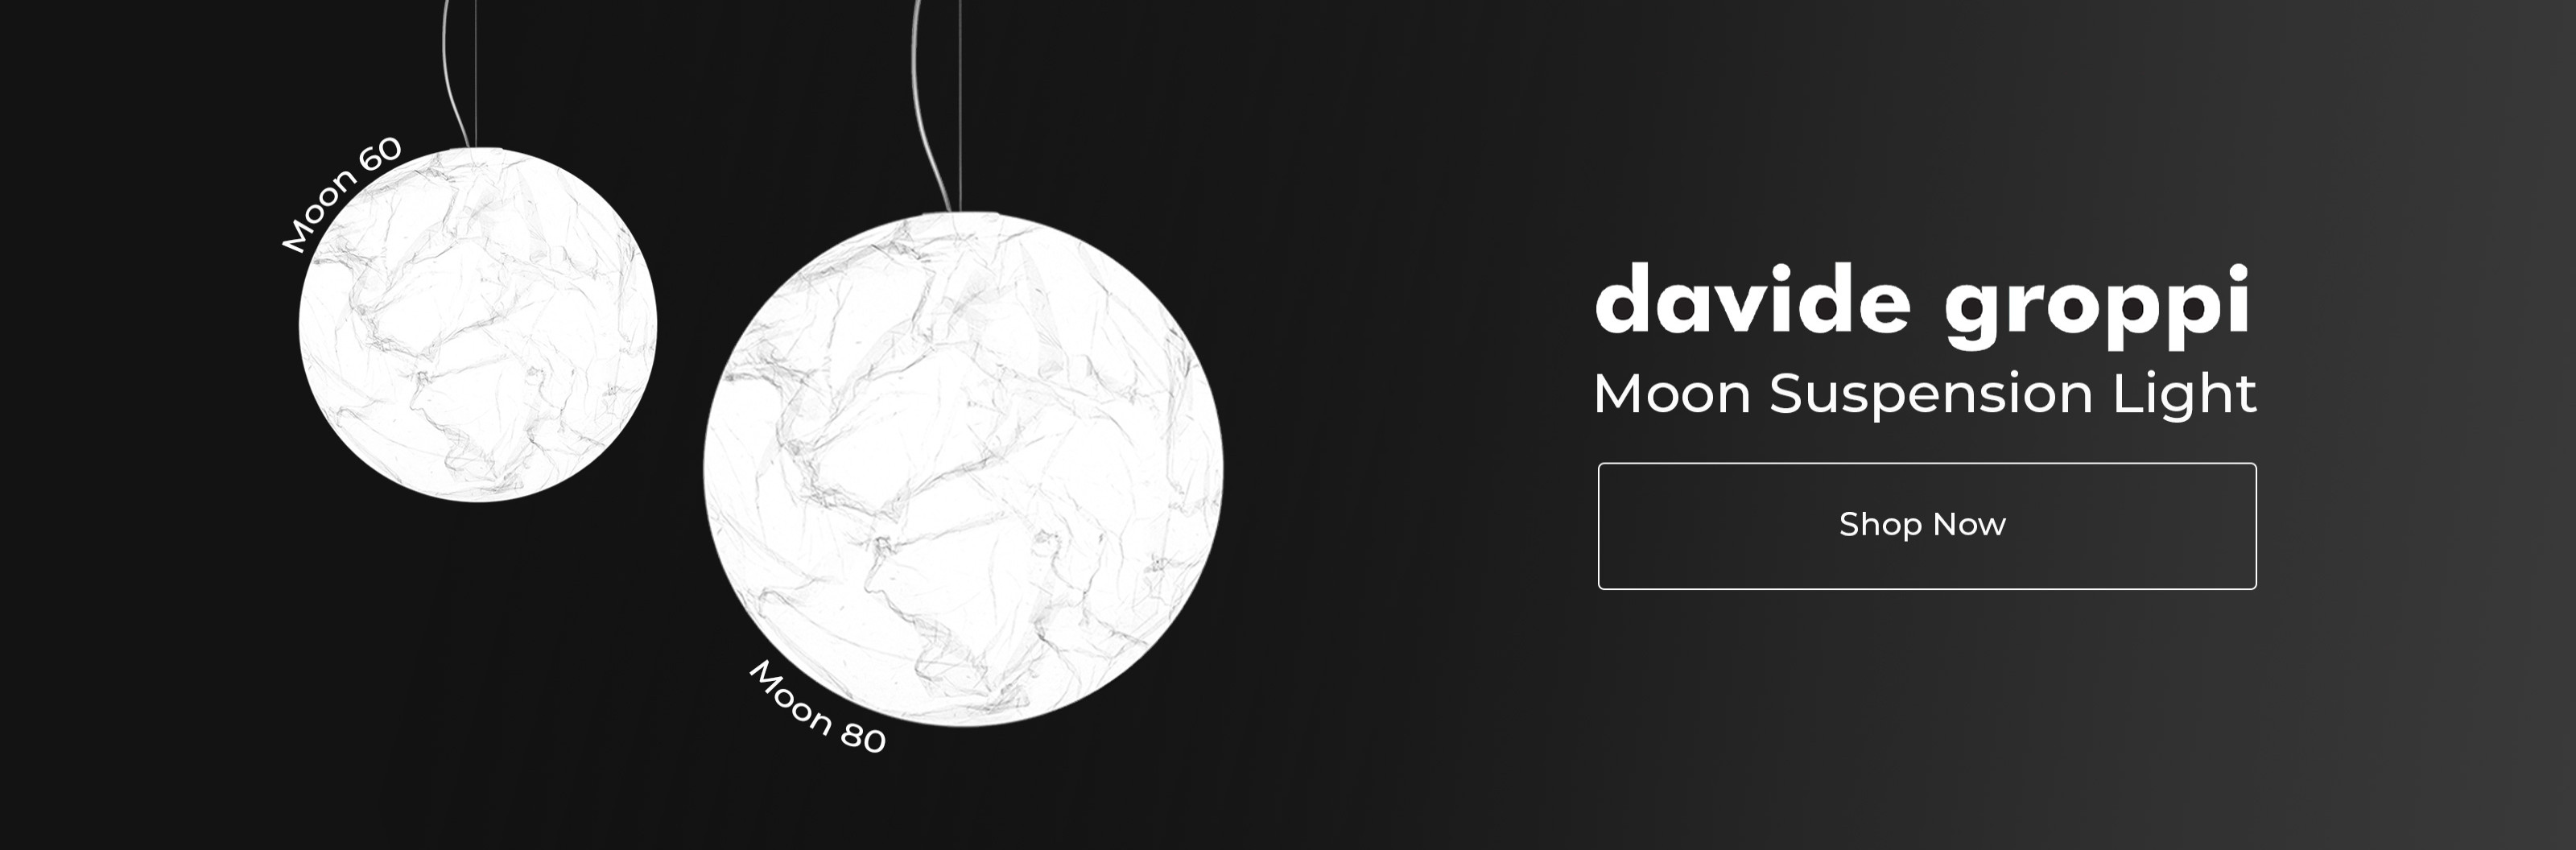 Davide Groppi Moon Suspension